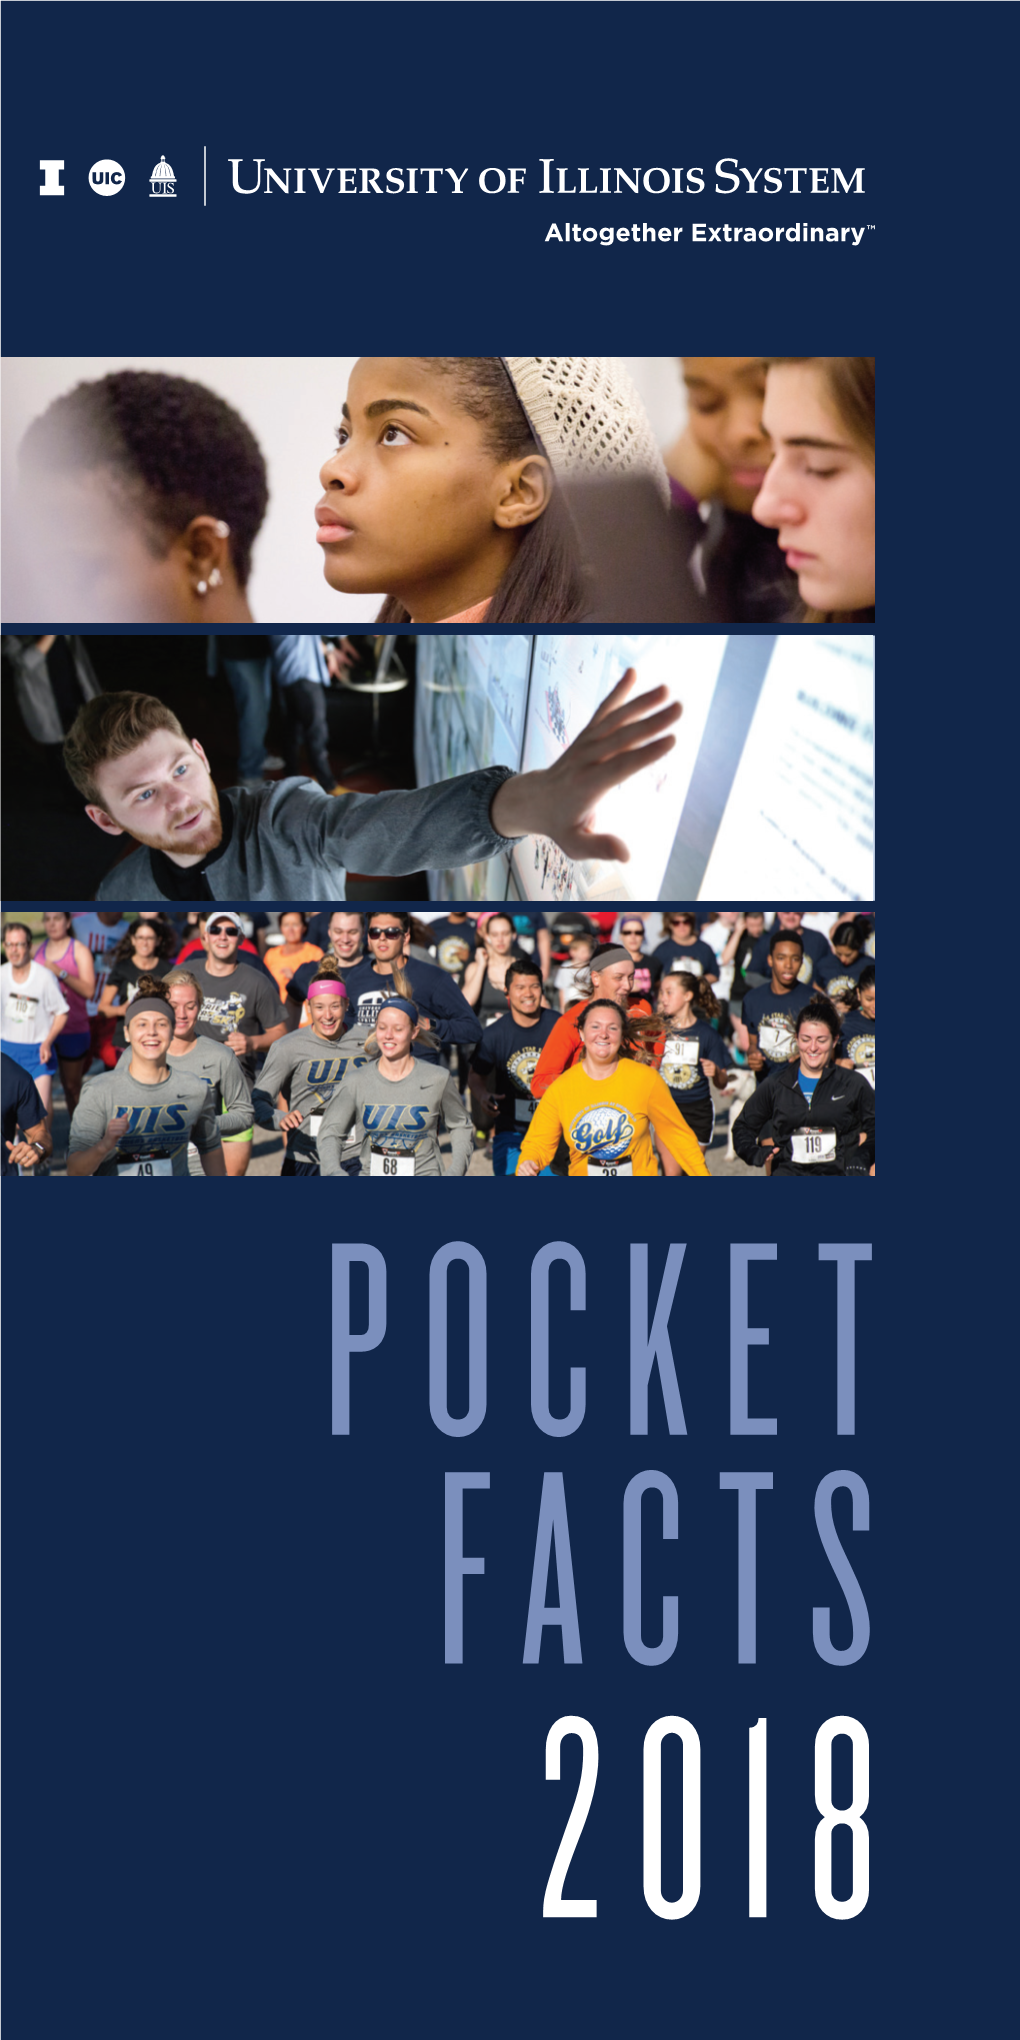 2018: Pocket Facts (PDF)